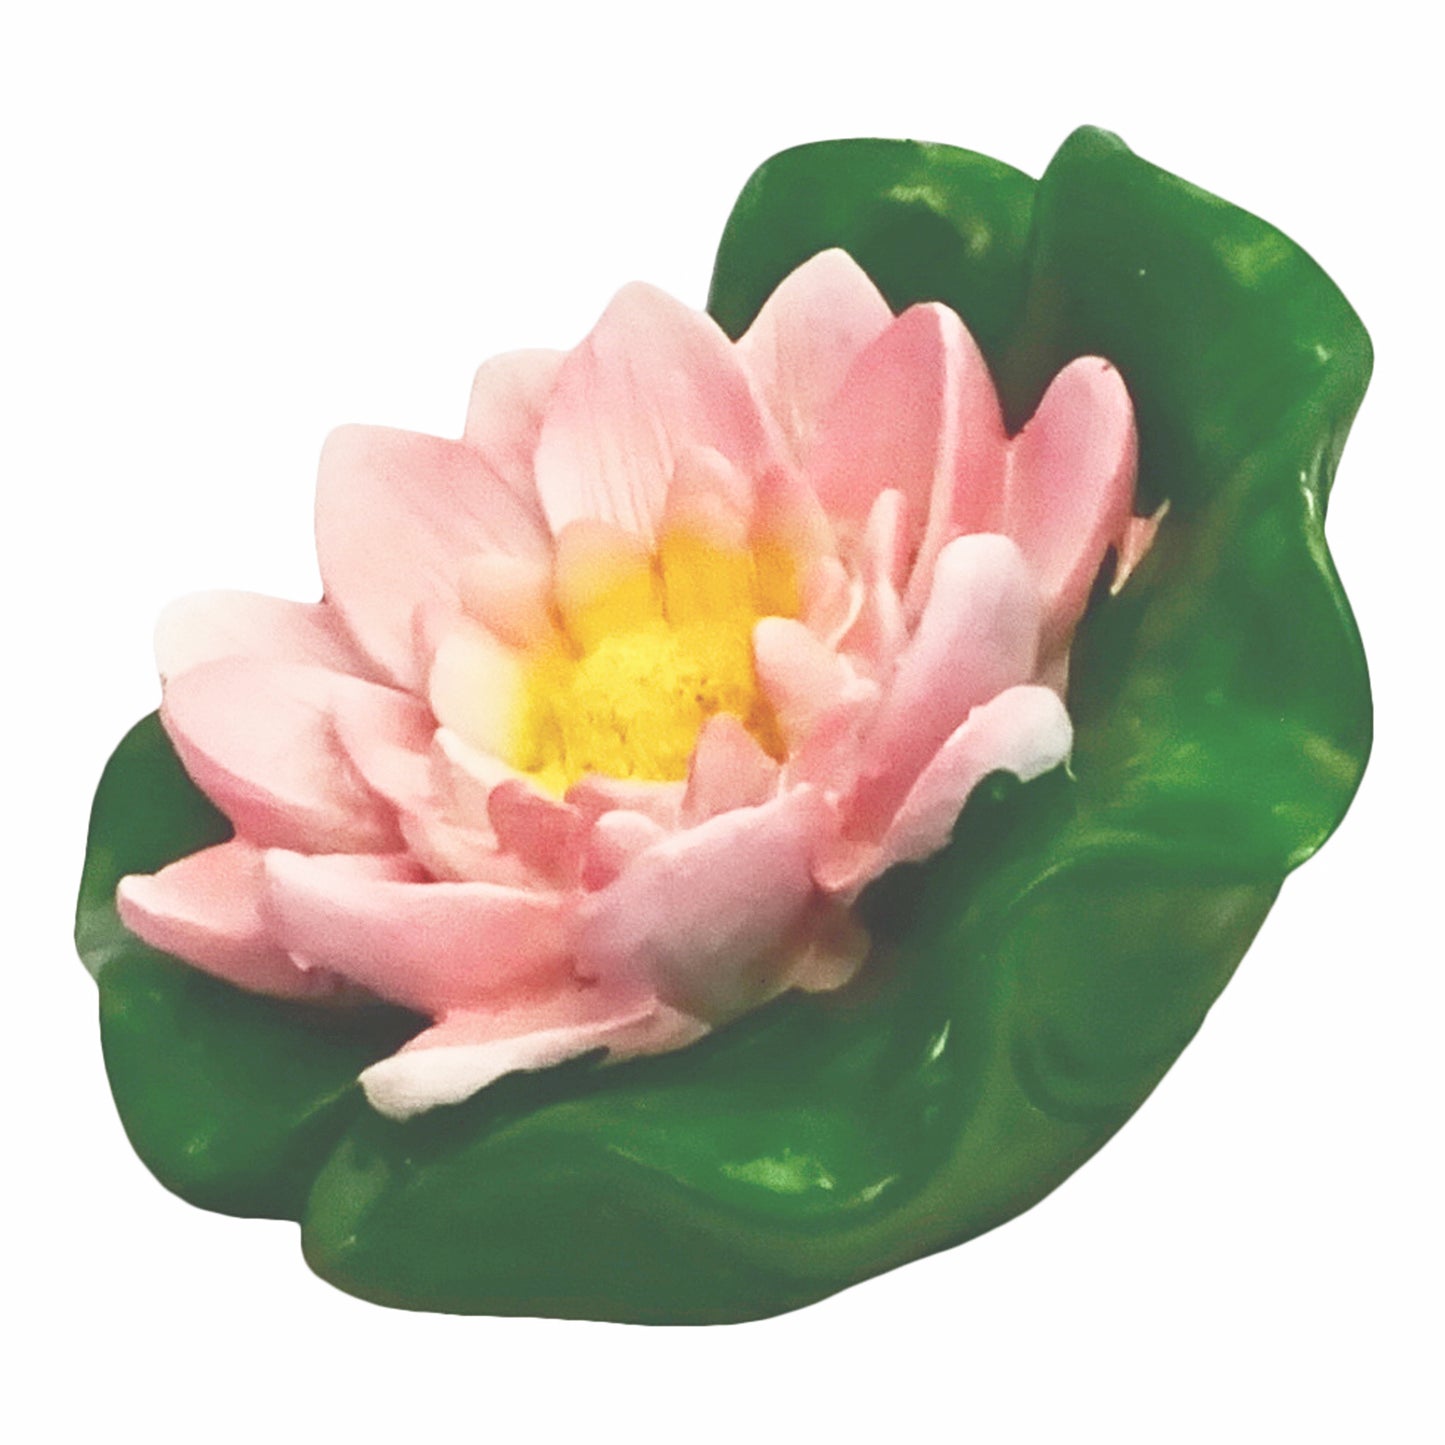 Fire Sale! Small Rain Gauge Outdoor Garden Decor Guage (Pink Lotus Flower)